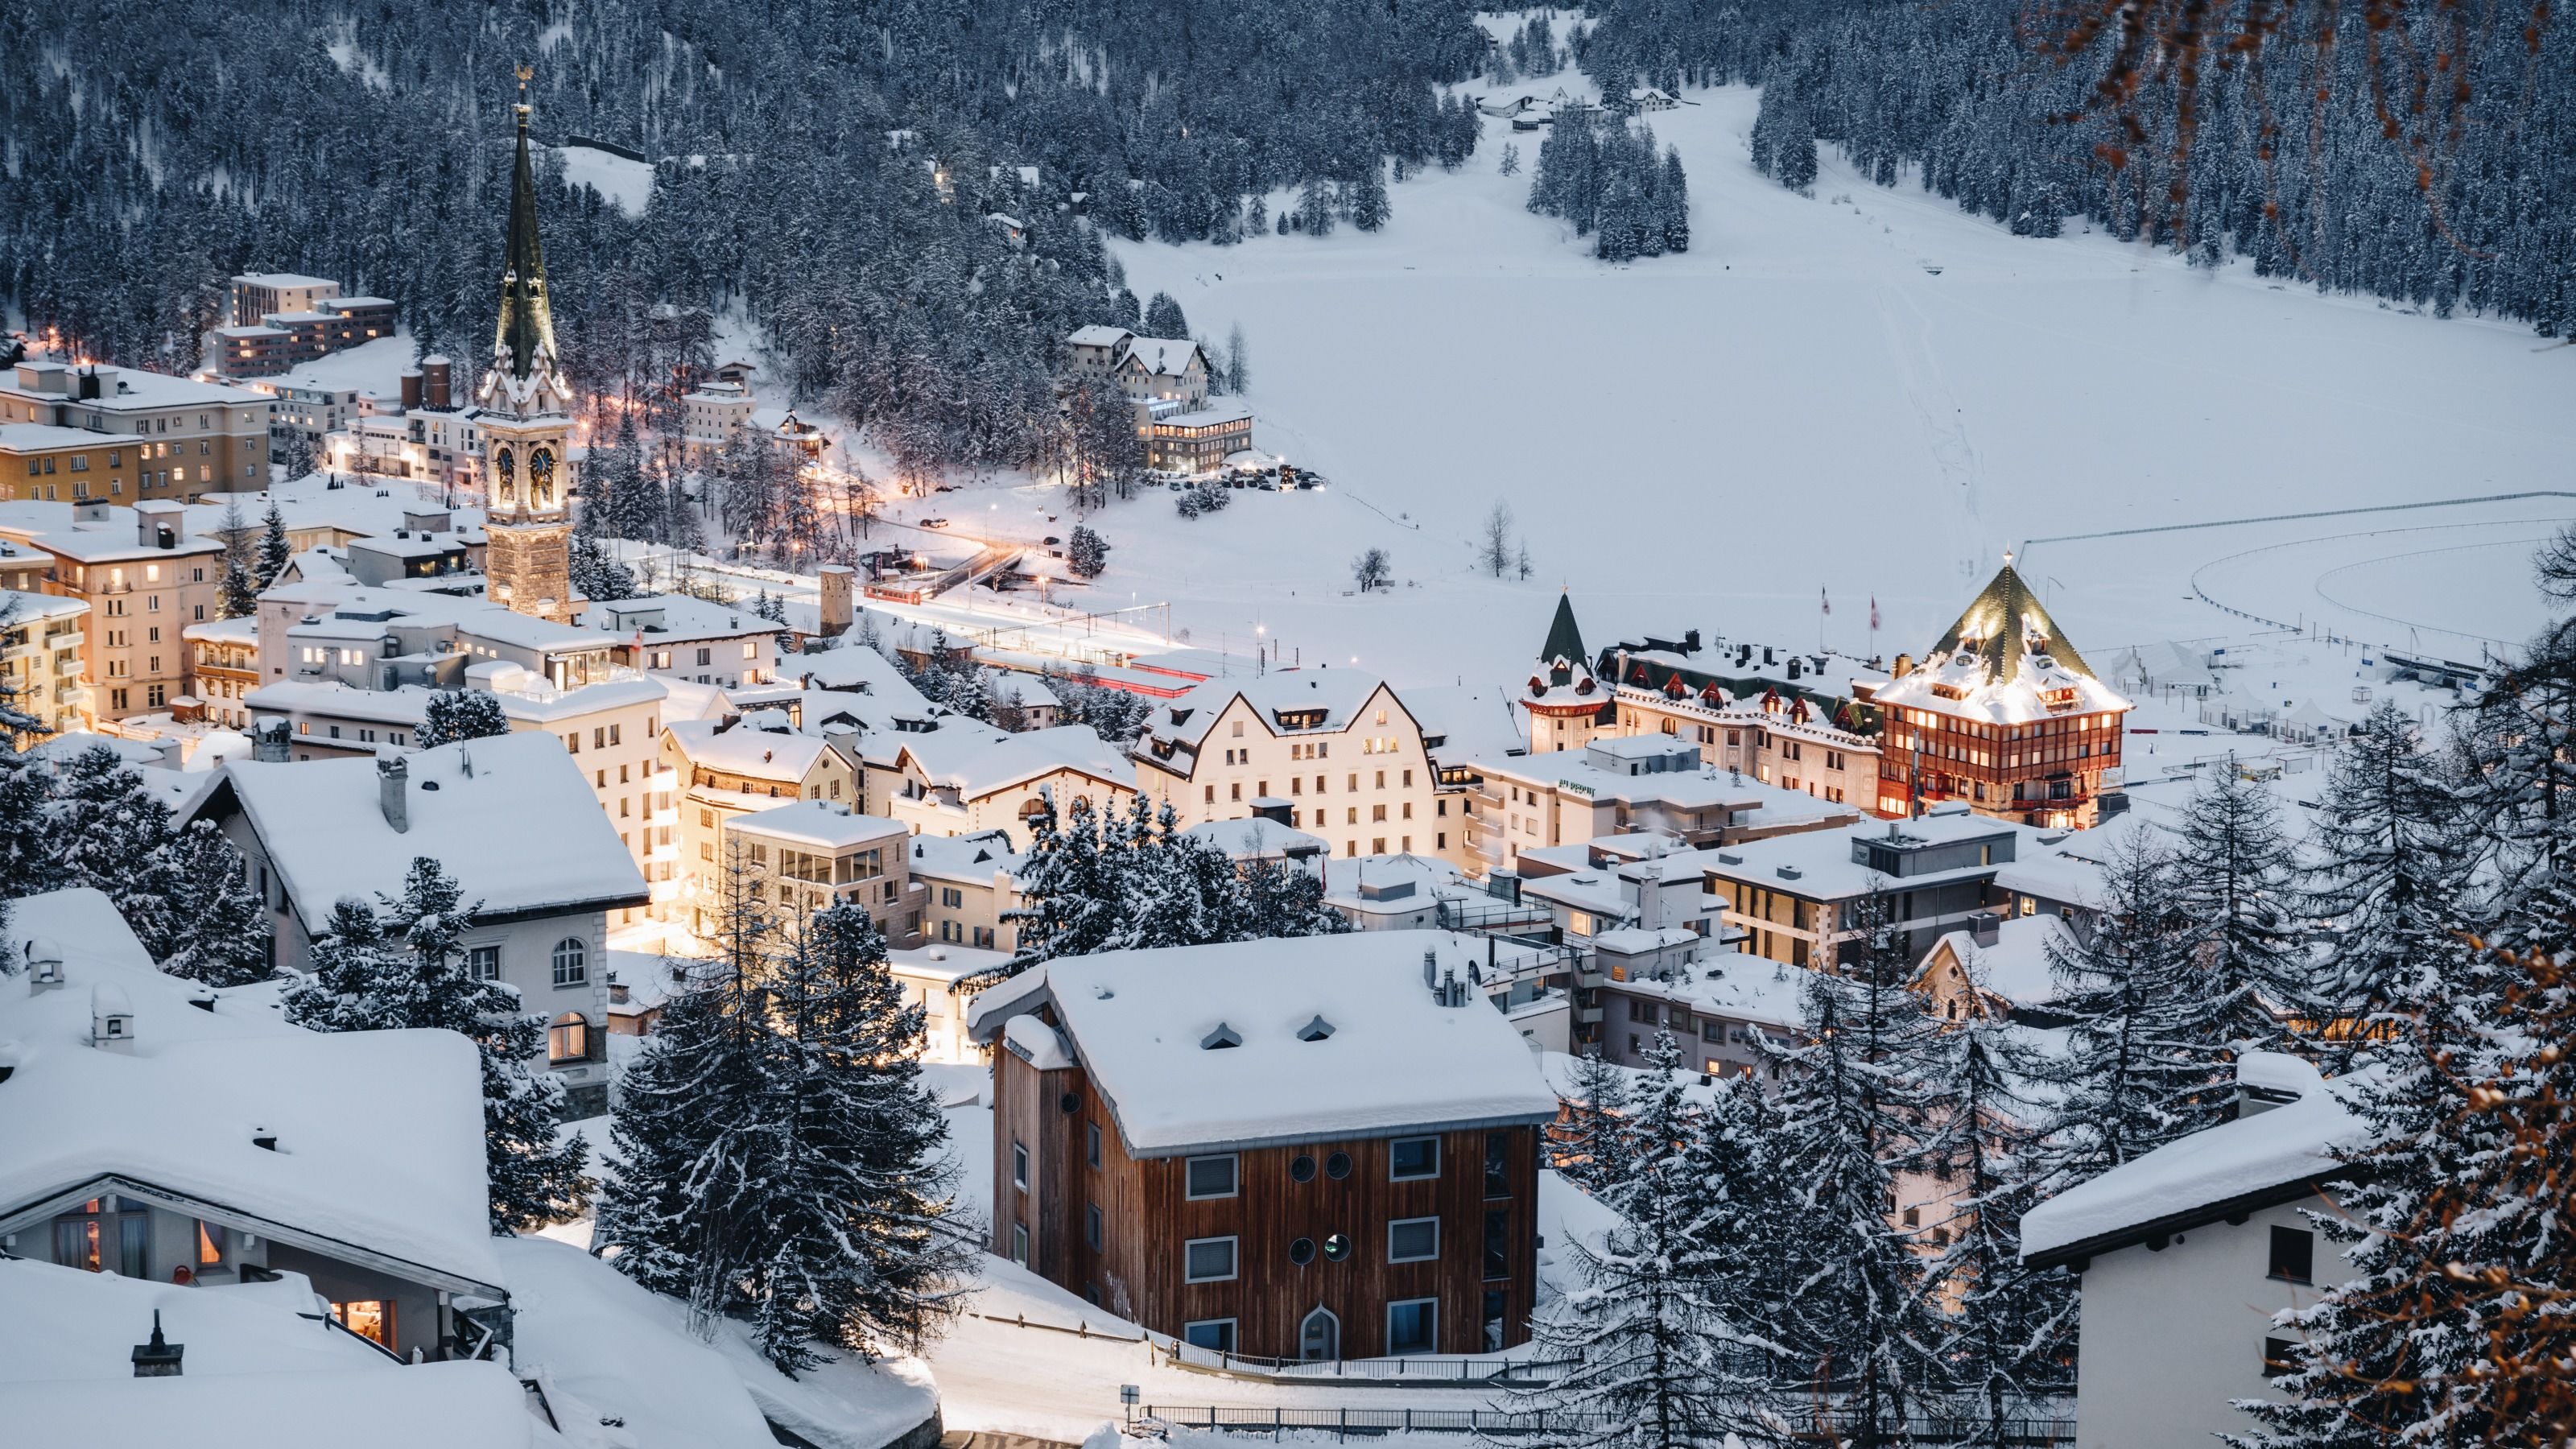 St. Moritz Switzerland | Tourism